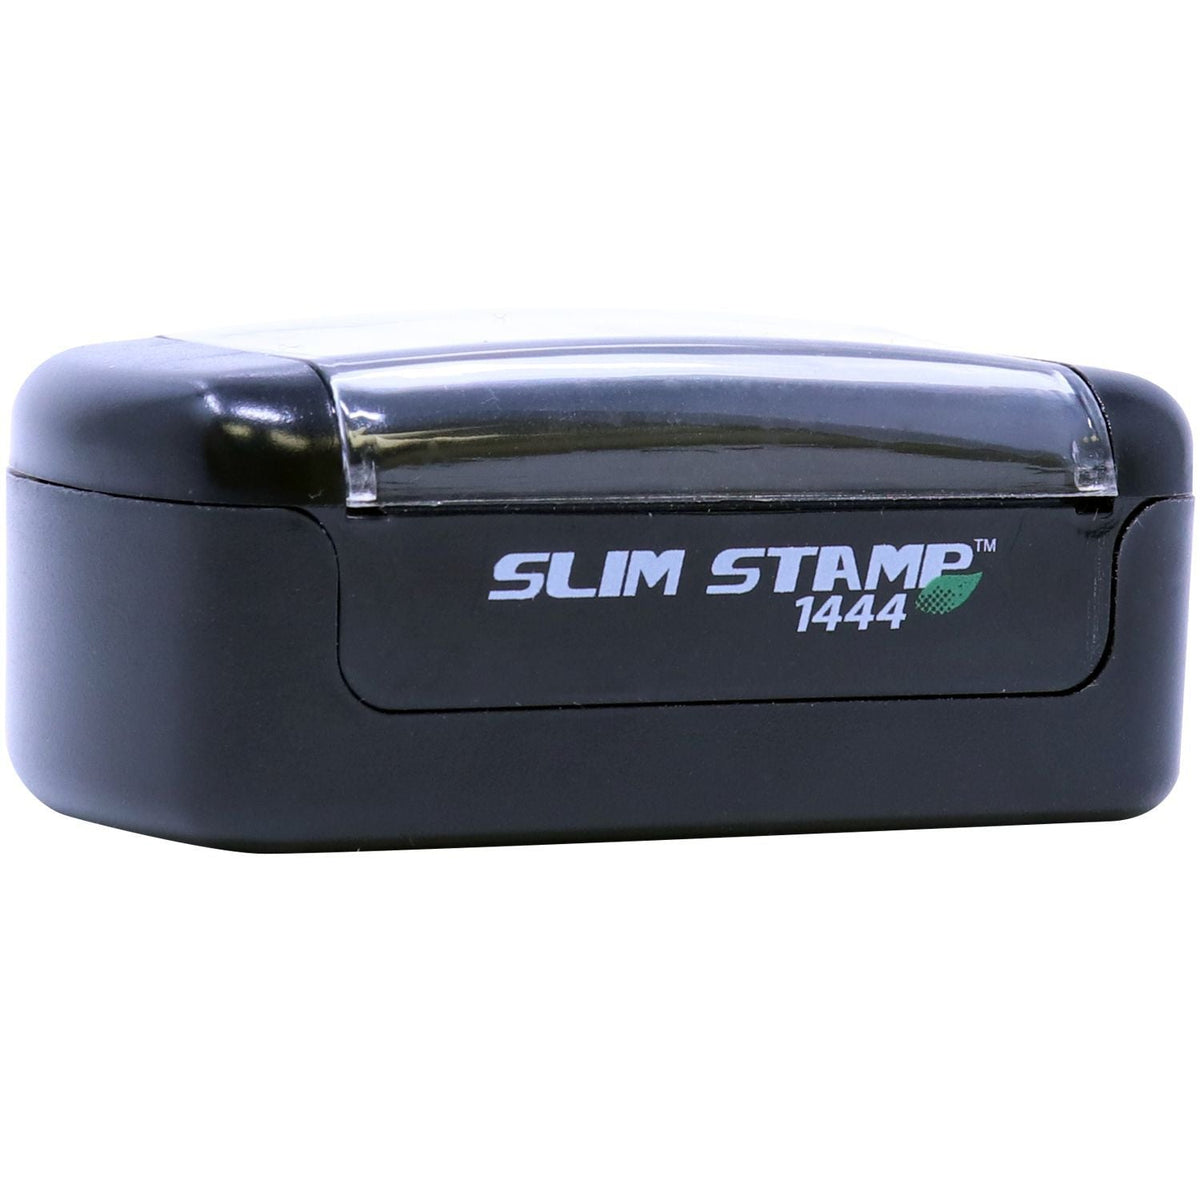 Slimstamp Custom Stamp 1444 Front Angle